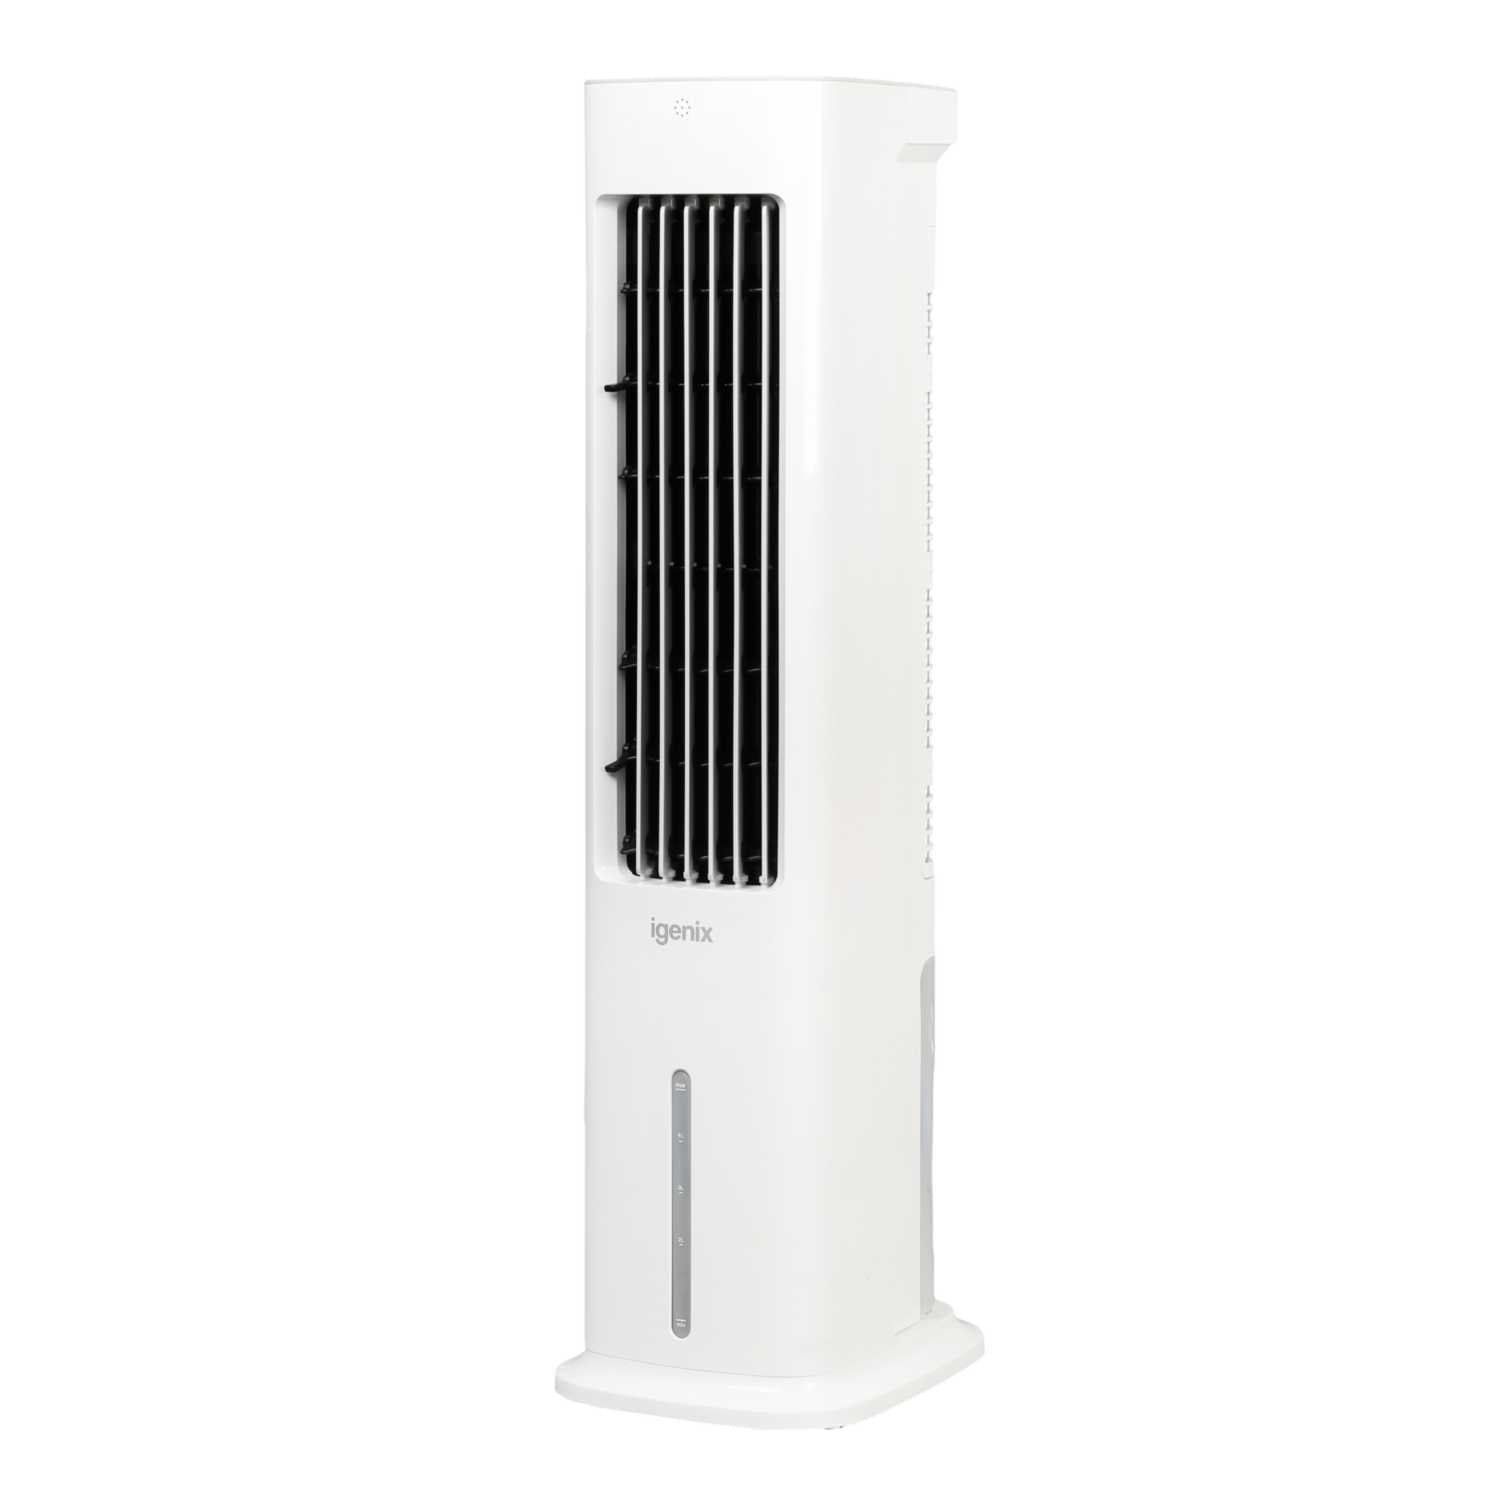 Igenix IG9706 5L Evaporative Air Cooler White - Premium Air Coolers from Pik a Pak - Just $97.99! Shop now at W Hurst & Son (IW) Ltd